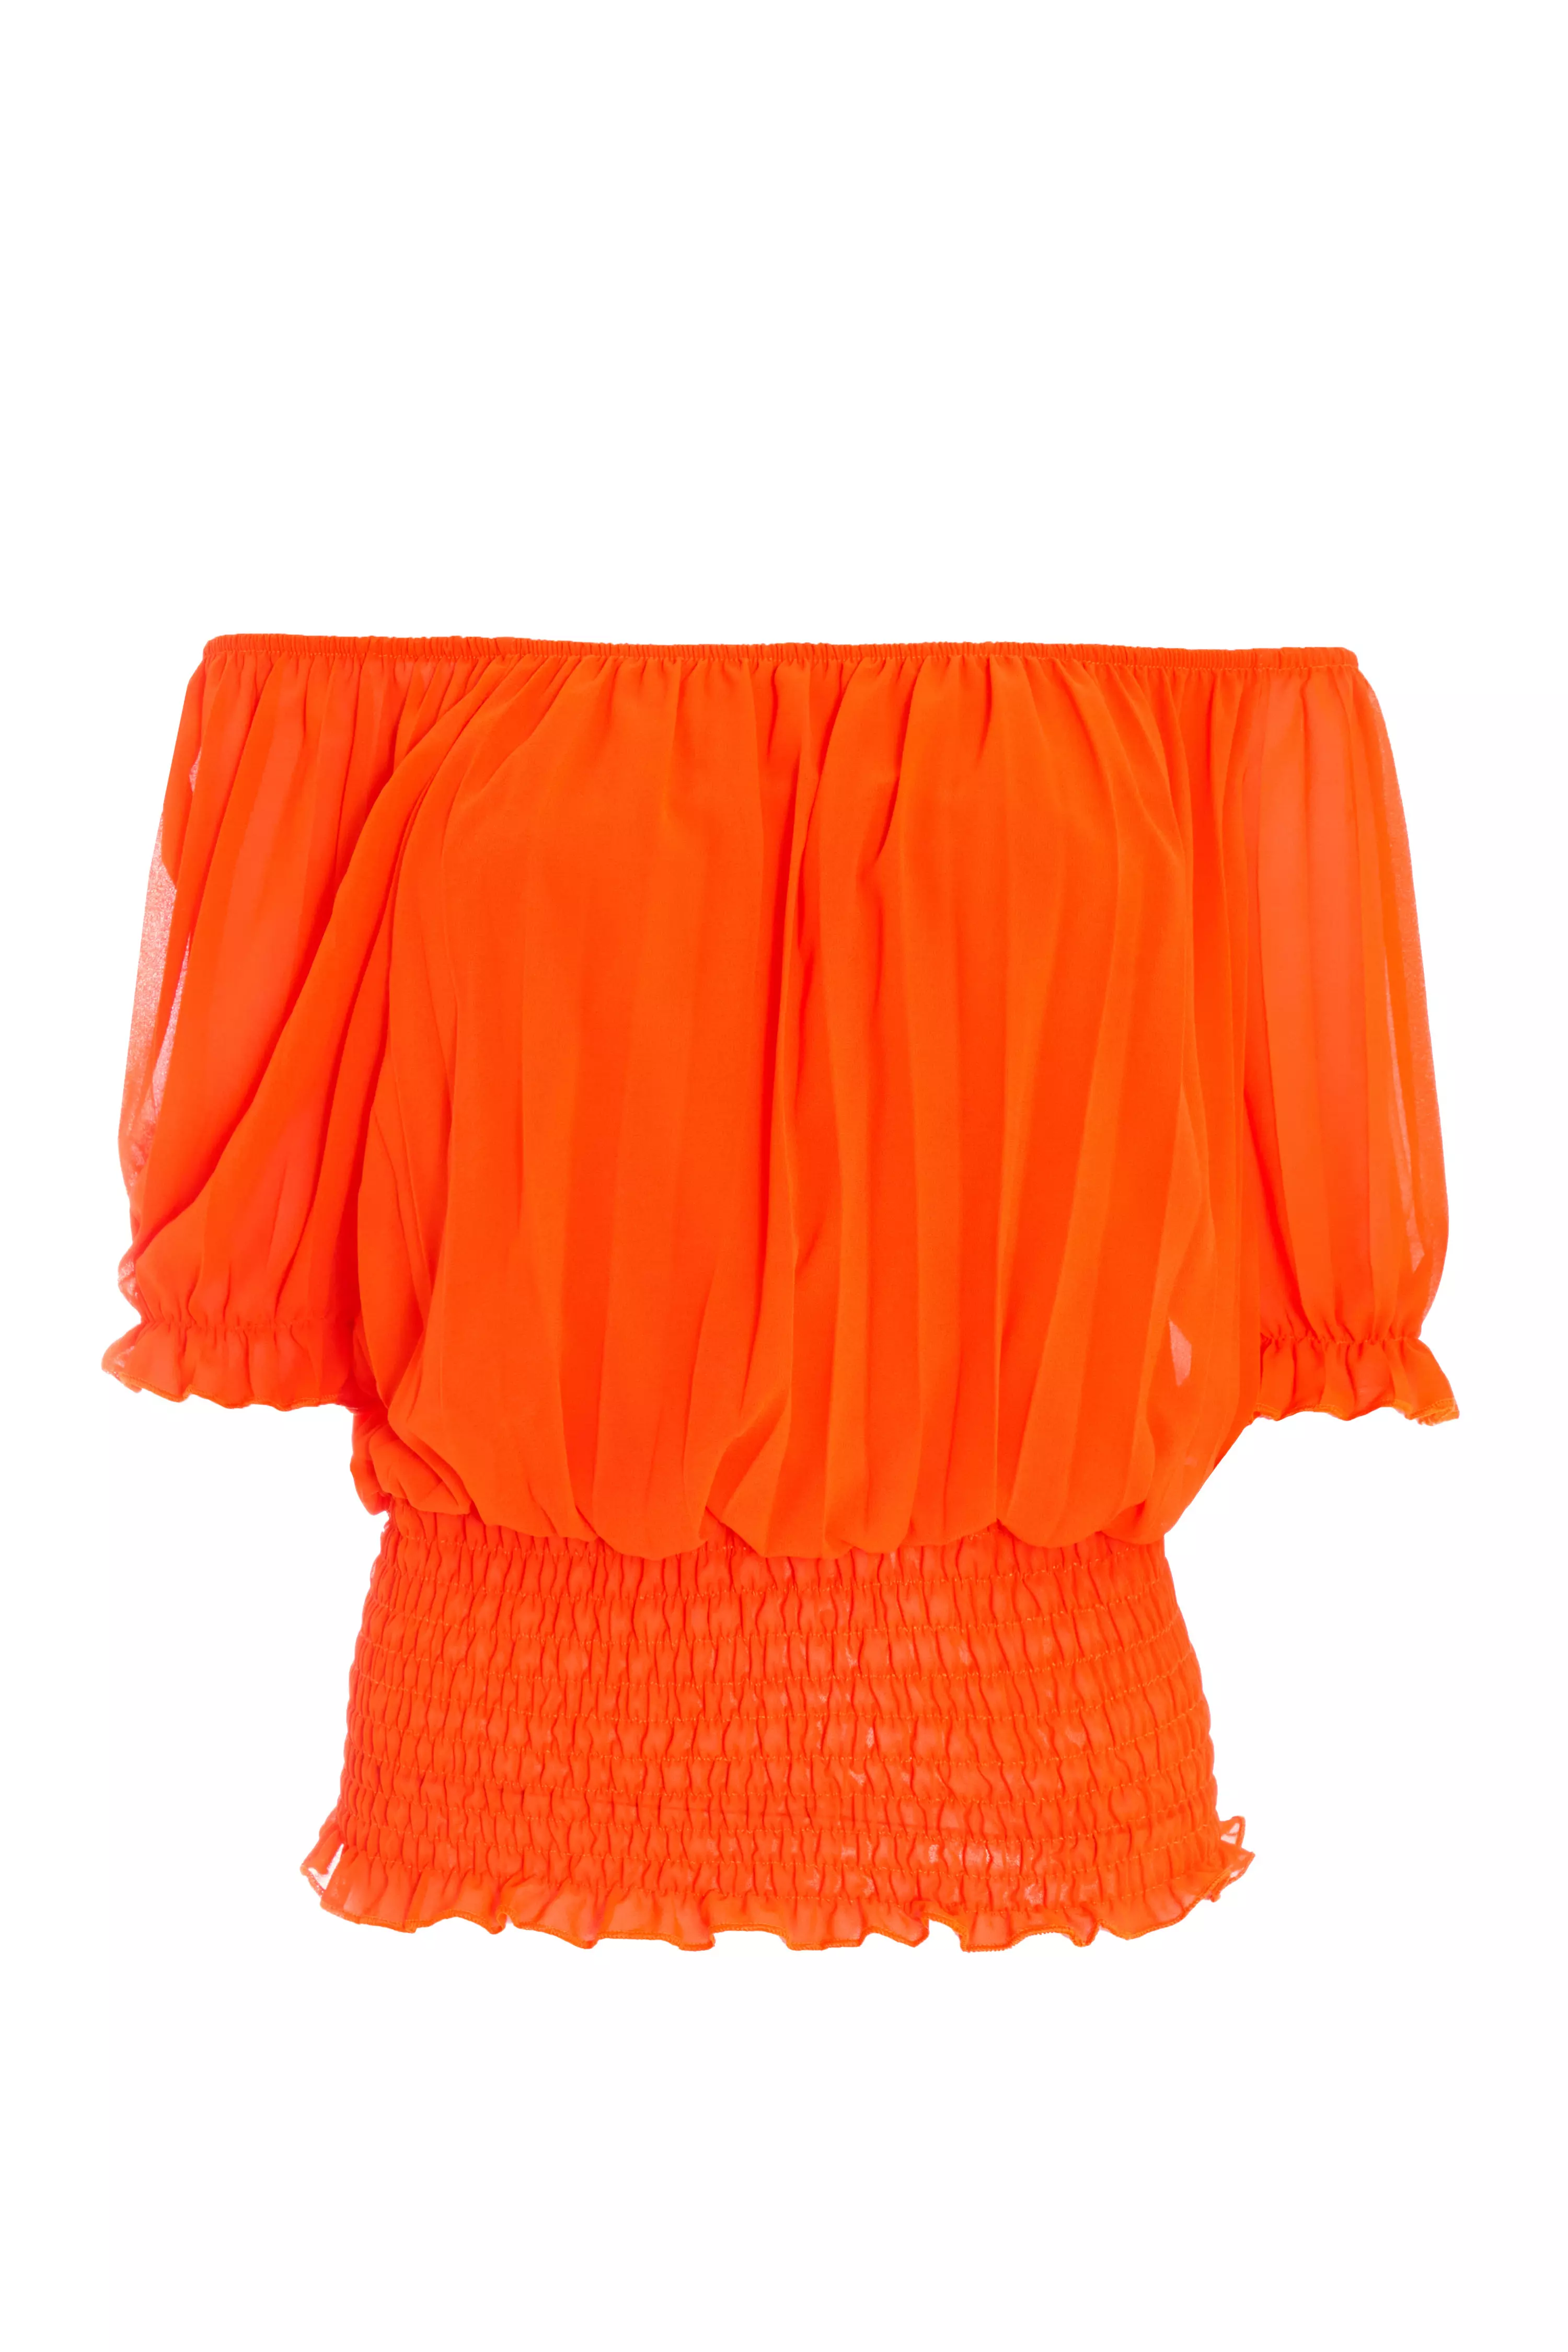 Orange Pleated Bardot Top - QUIZ Clothing